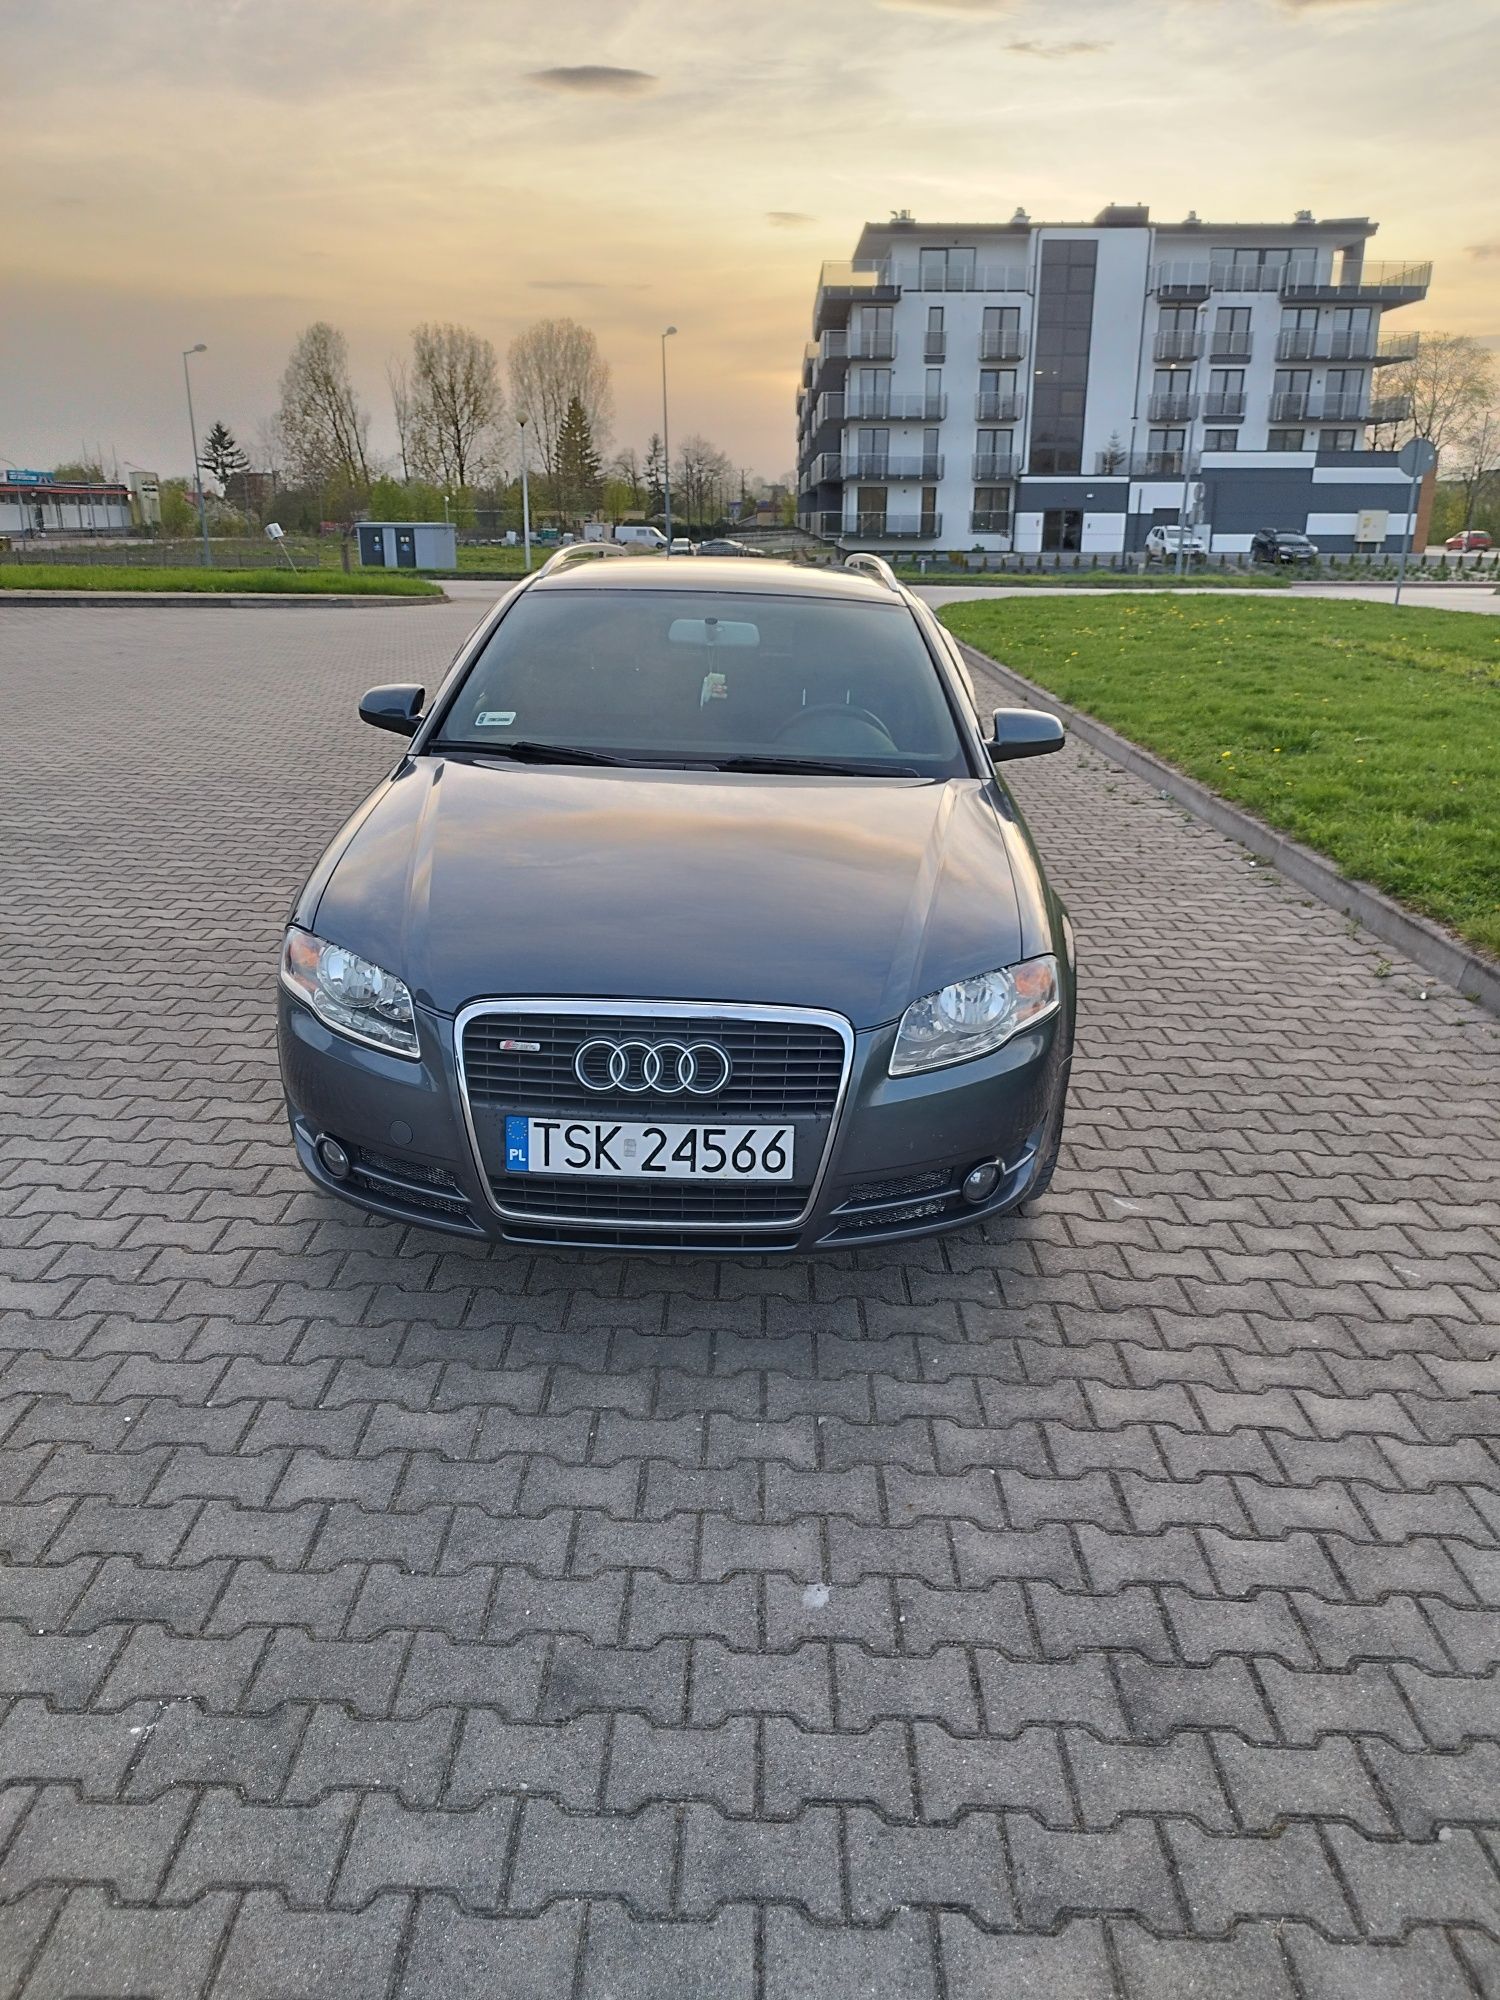 Audi a4 b7 zadbane 2.0 140km osoba prywatna